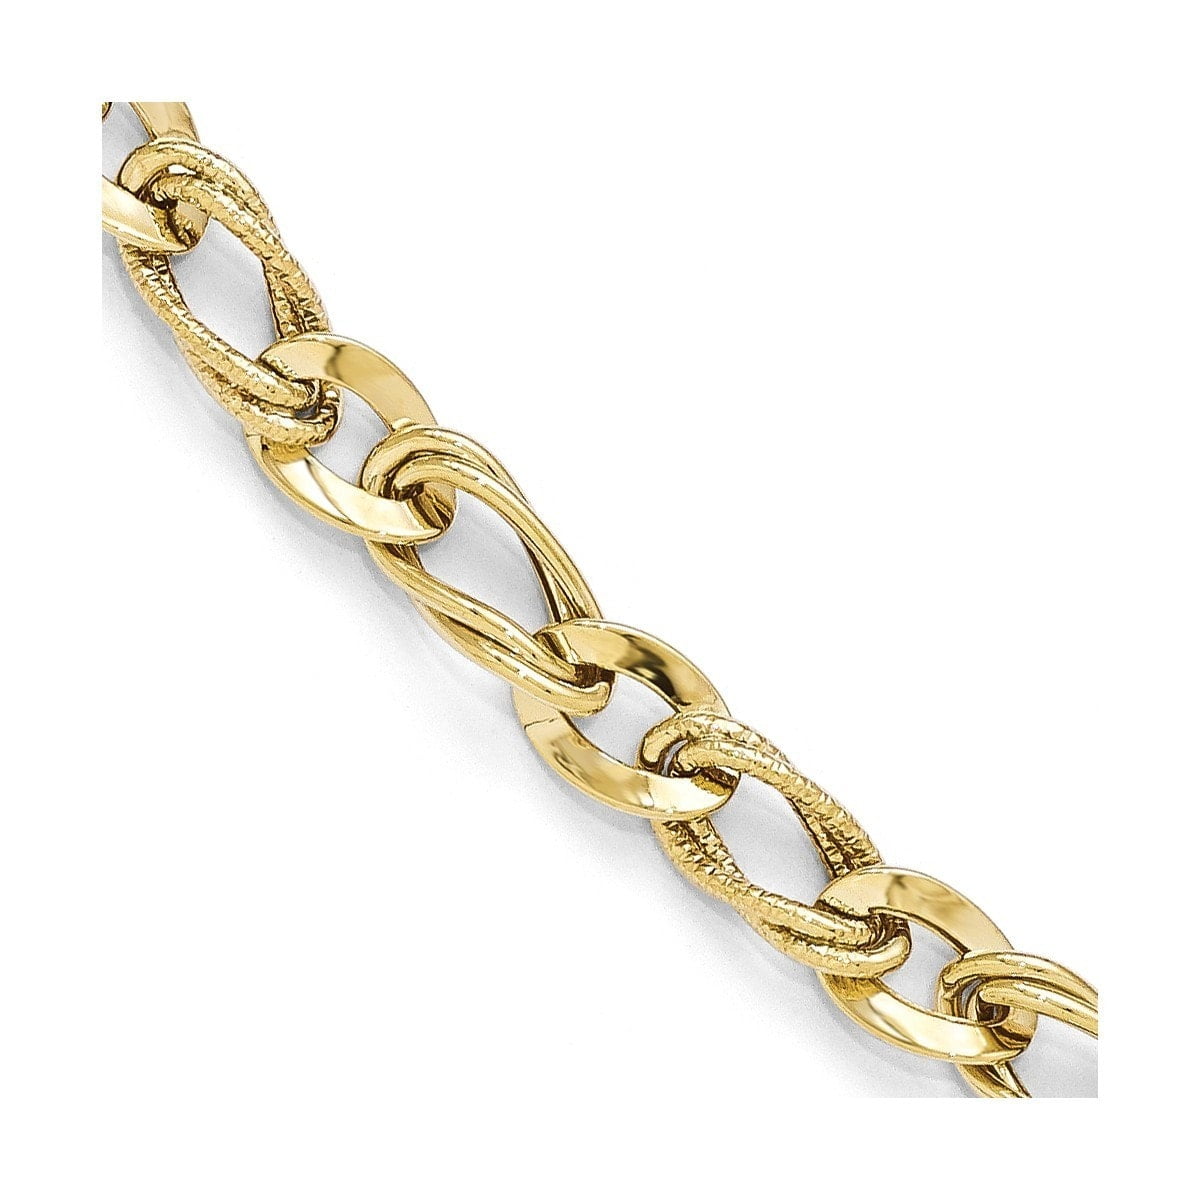 10 karat gold bracelet